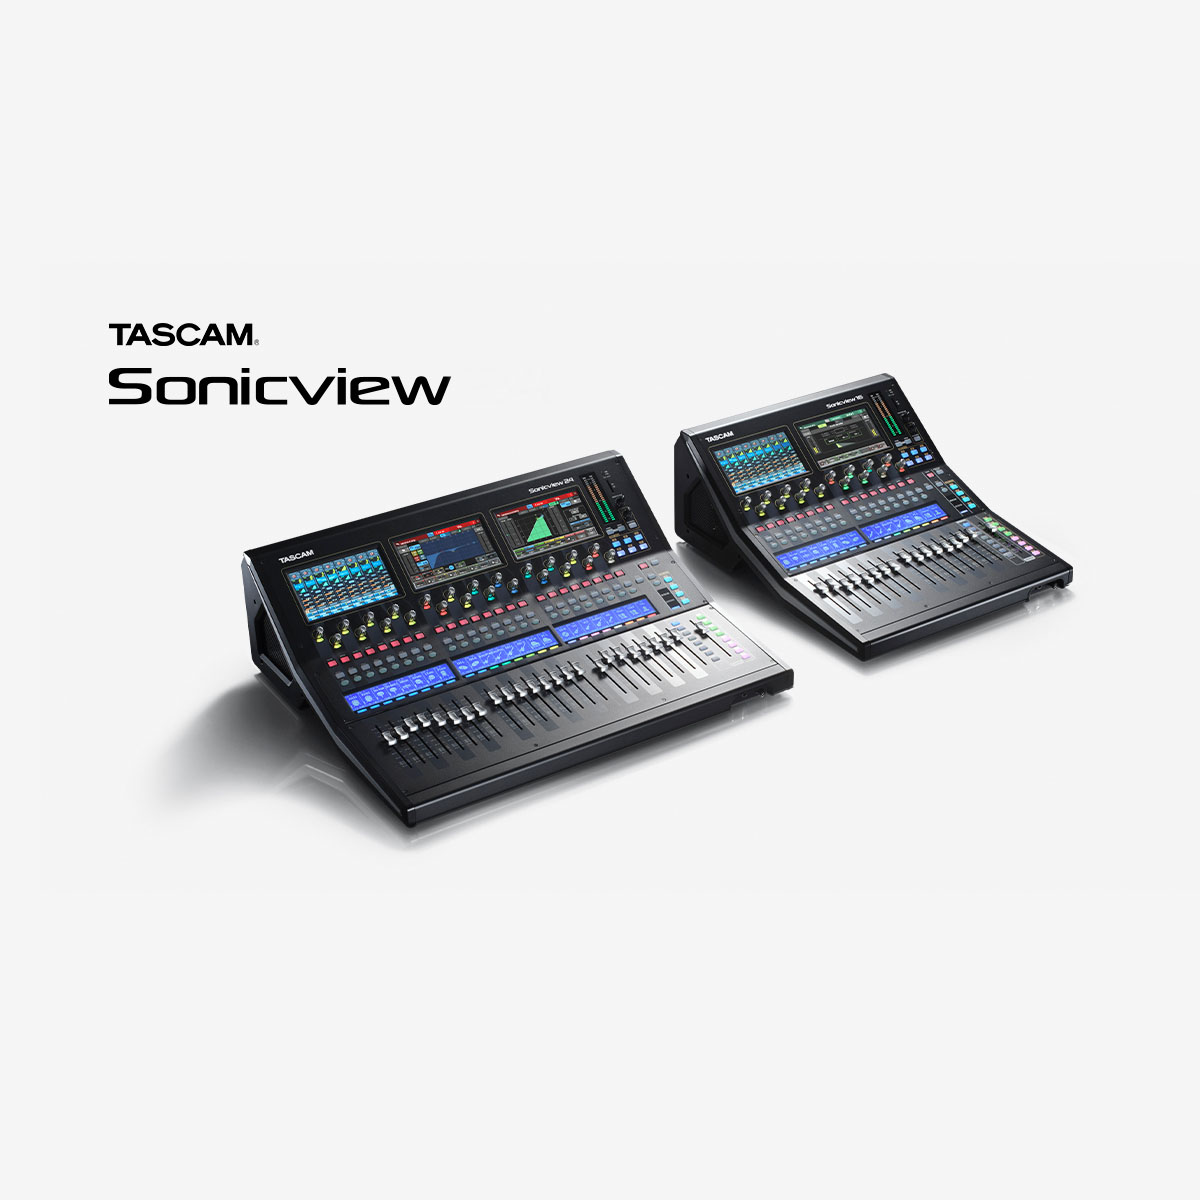 『TASCAM Sonicview シリーズ』の最新ファームウェア V1.5.3および『IF-MTR32』の最新ファームウェア V1.12をリリース